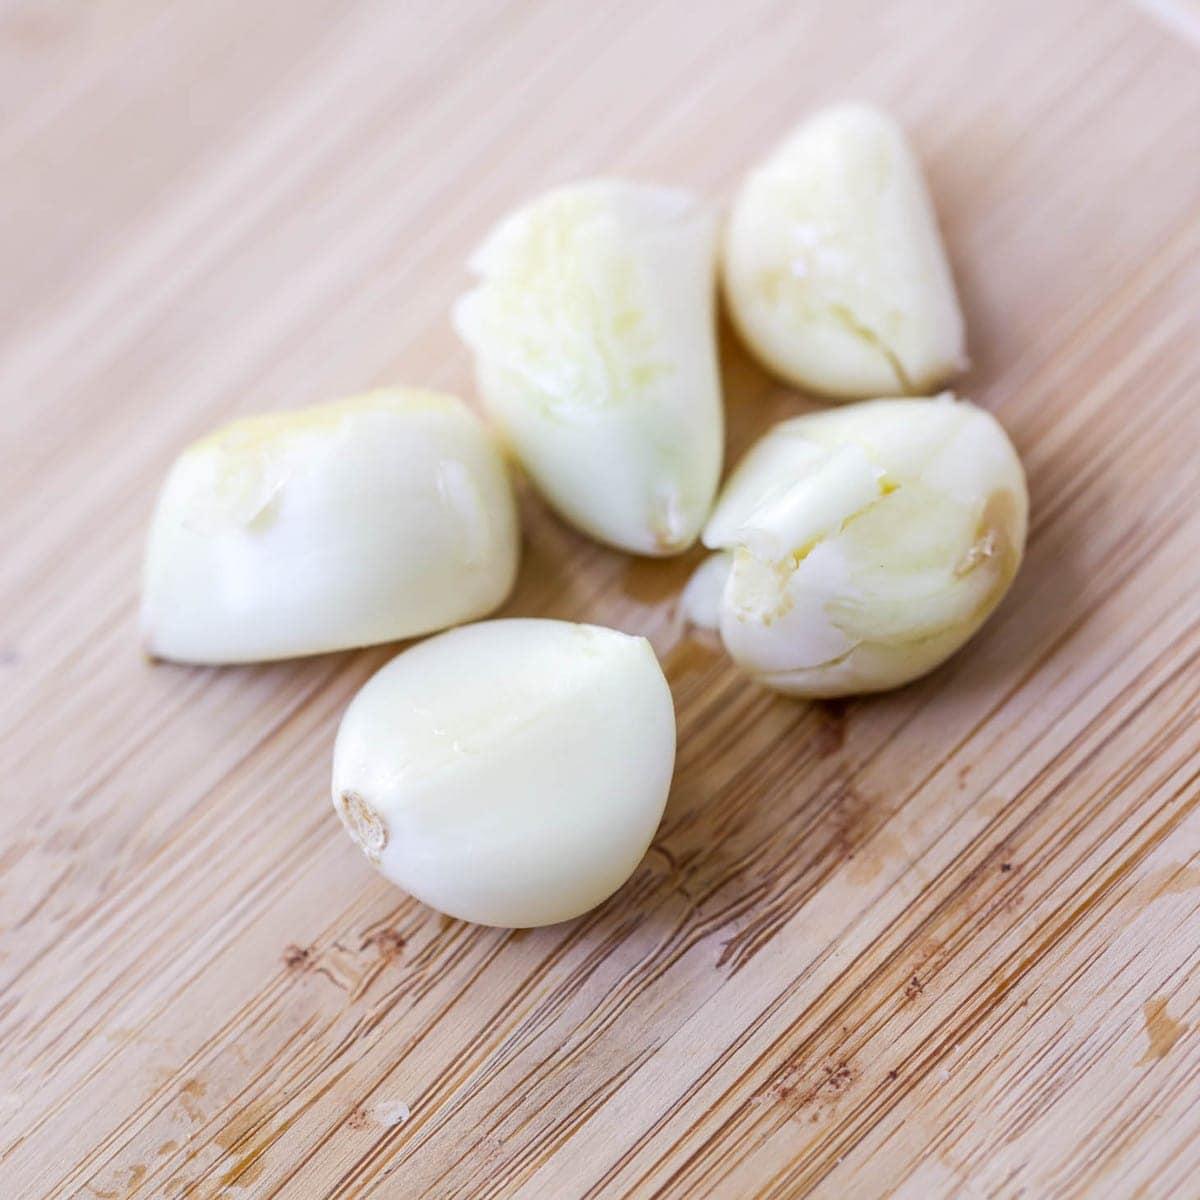 Five peeled garlic cloves